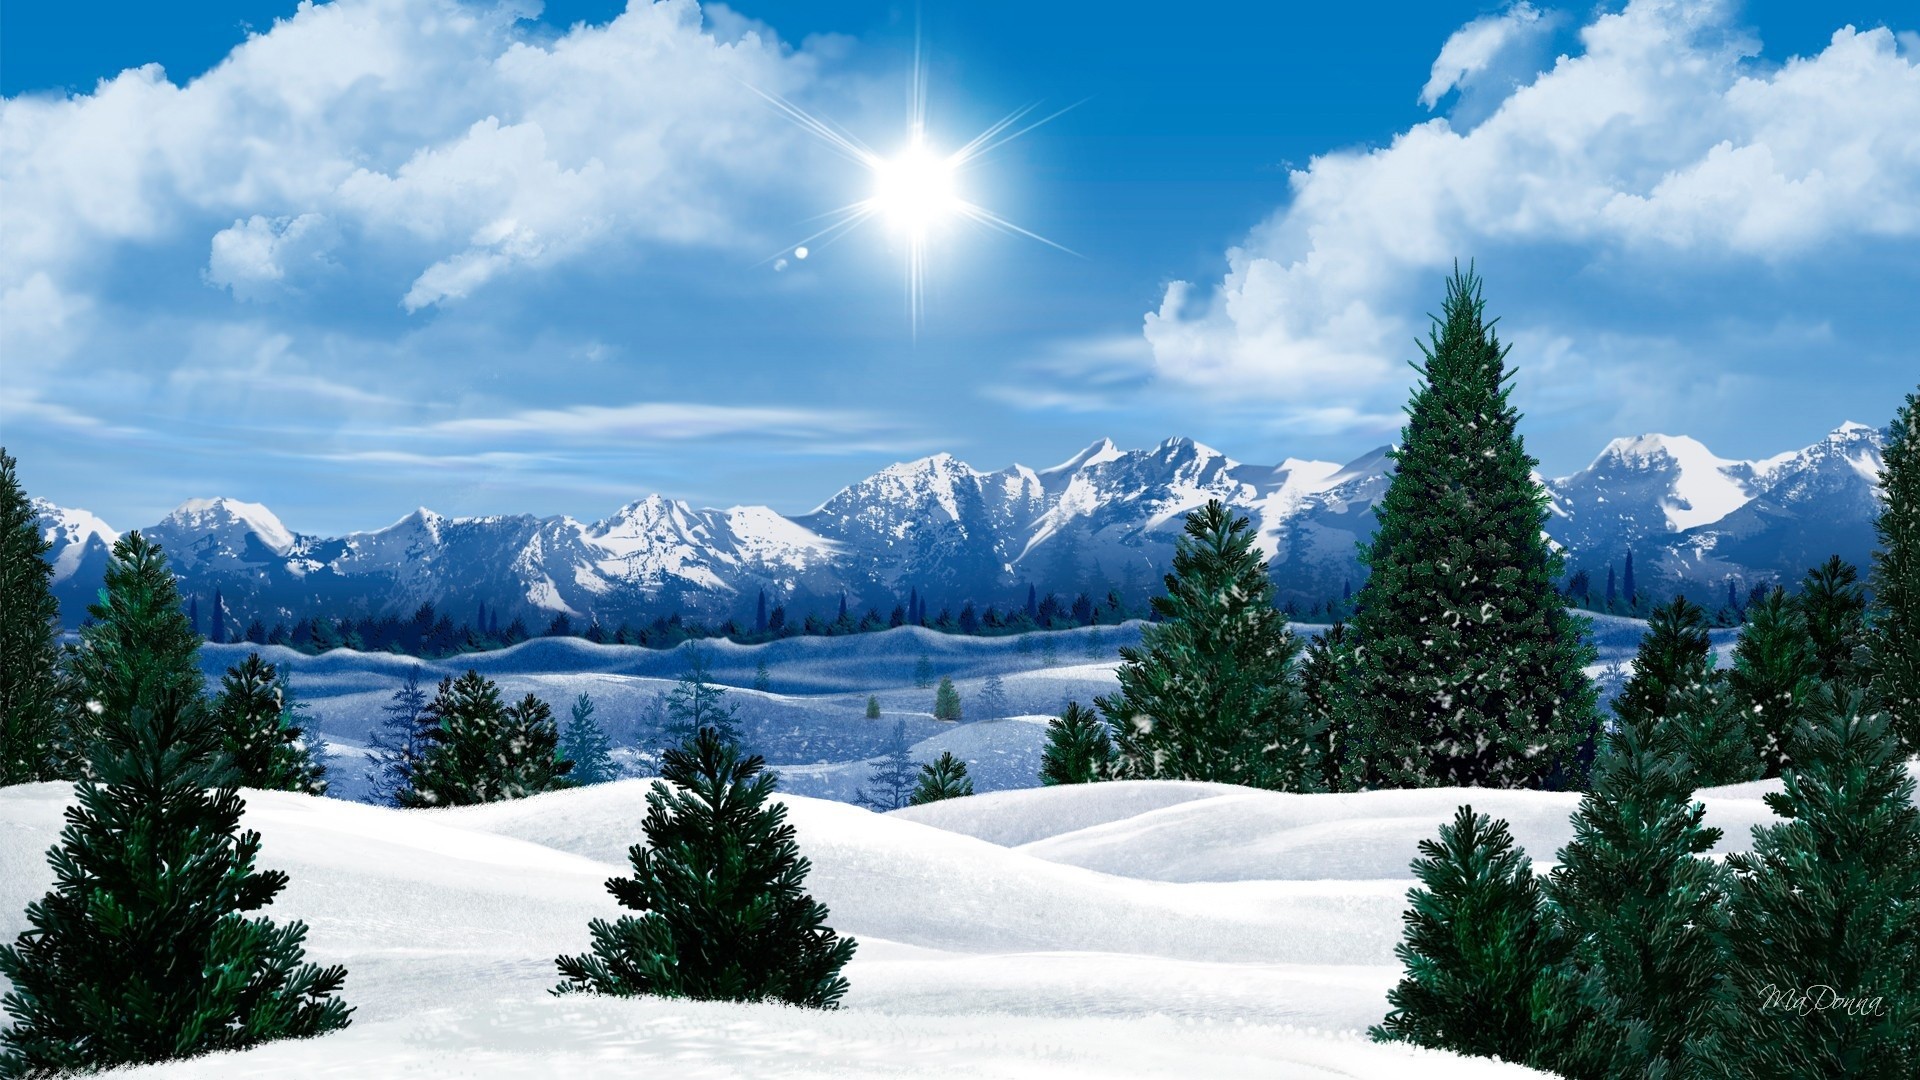 1920x1080 Wonderful Winter Landscape - Hd Nature Wallpaper intended for Christmas  Landscape Background Wallpaper 13977